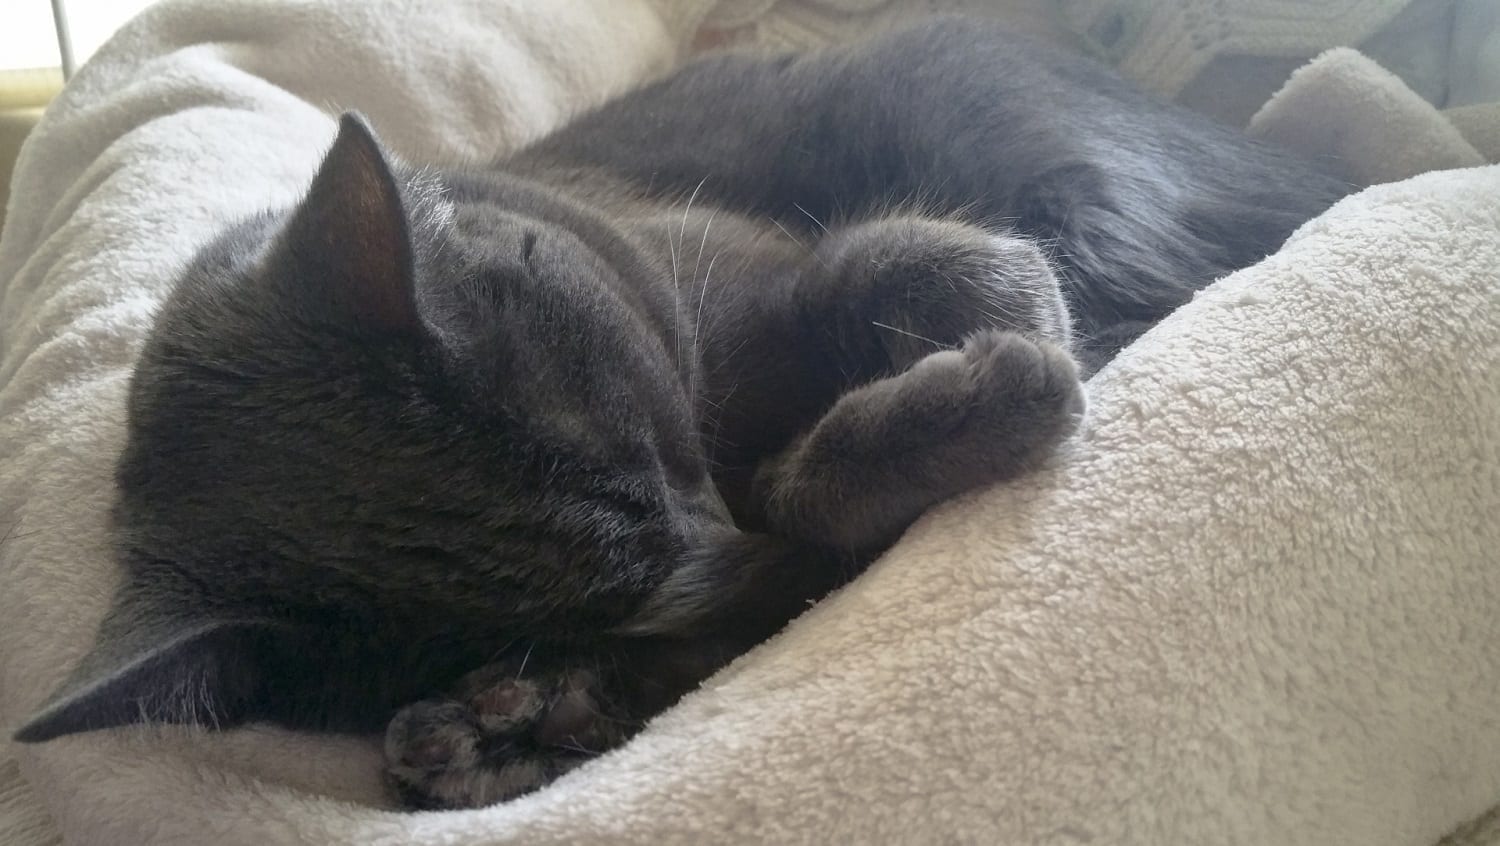 Black cat sleeping on a blanket, photo credit: Circe Denyer